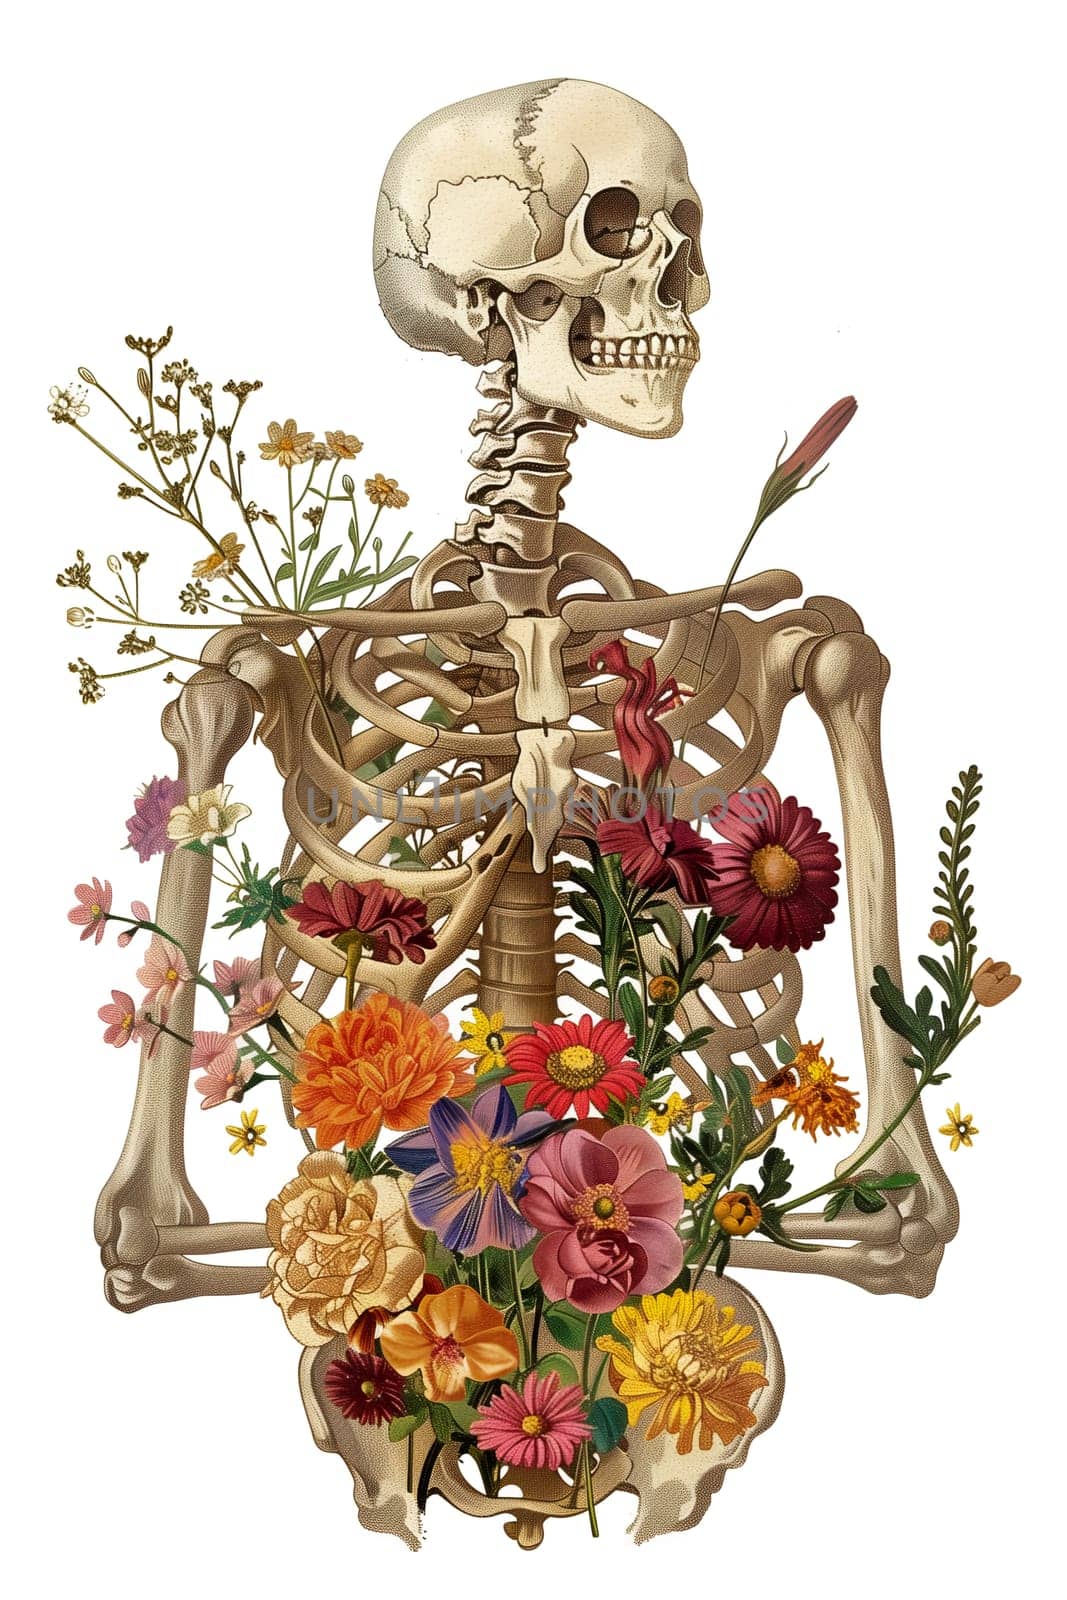 Vintage Illustration of skeleton with flowers by Dustick